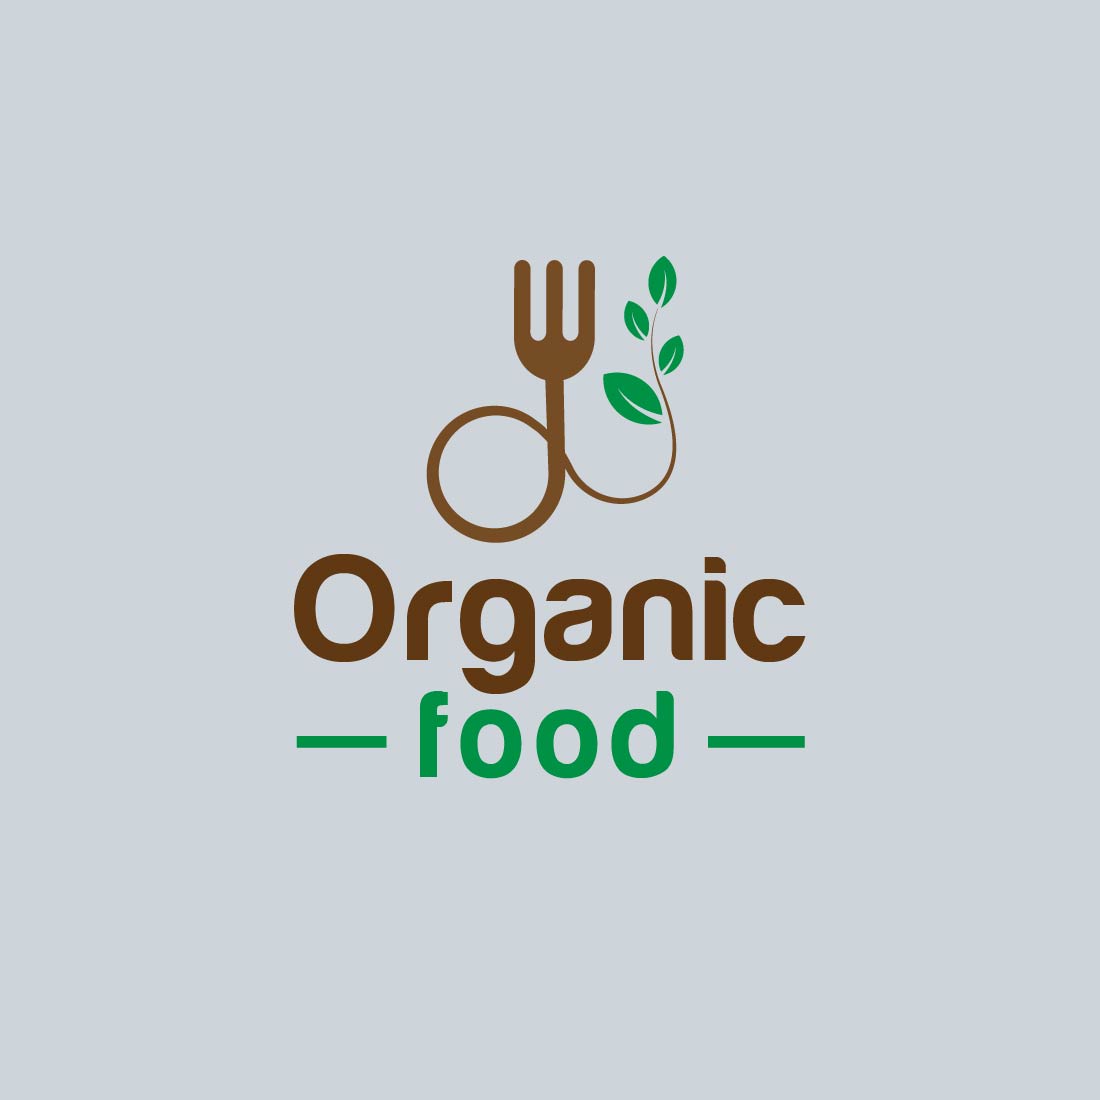 Organic Food Logo Design cover image.